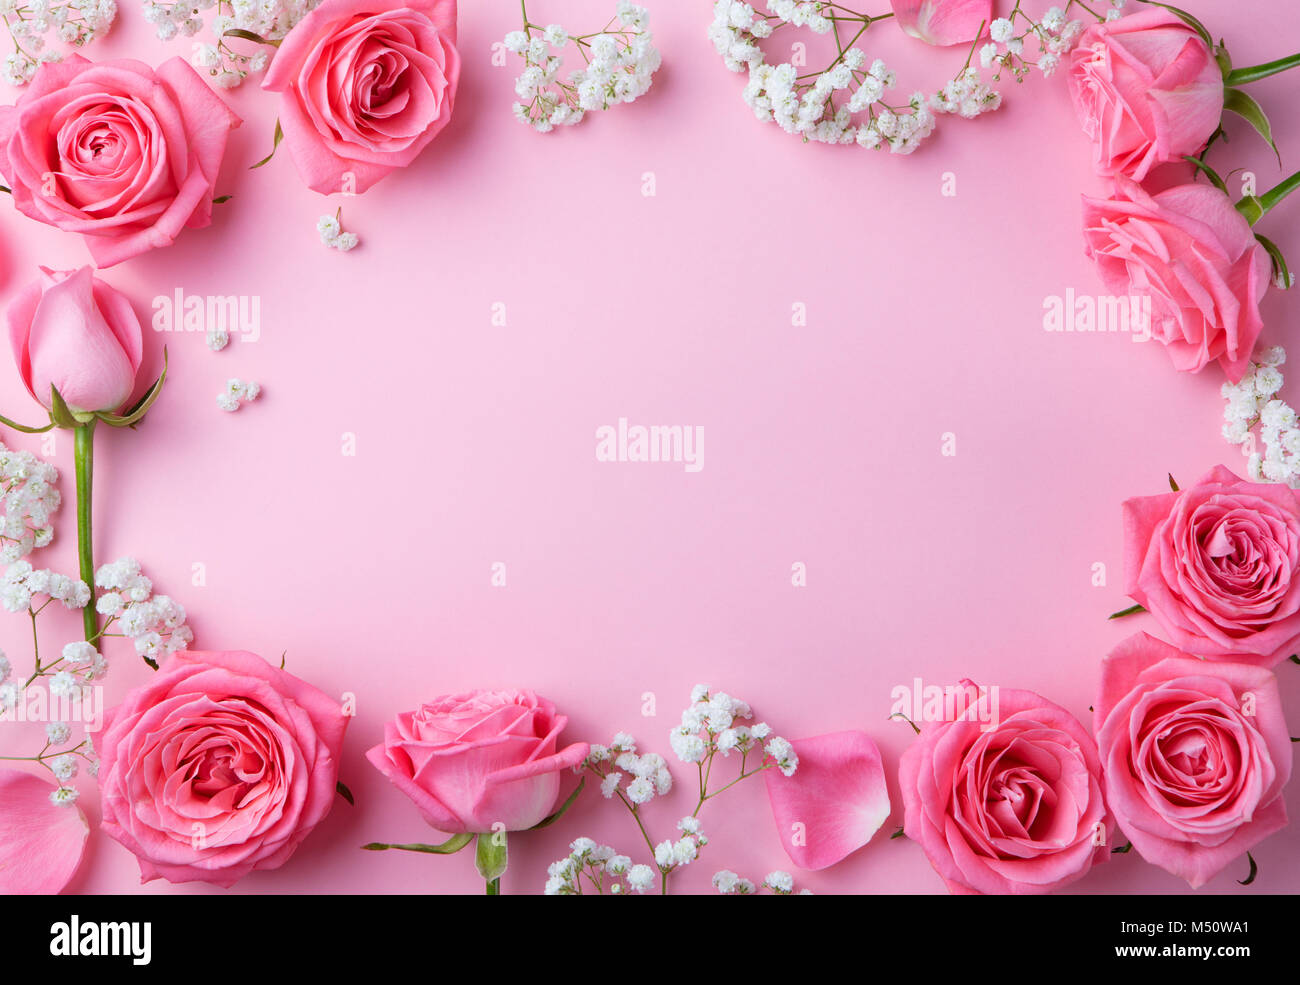 Pink Background Flowers Deals, 55% OFF | xevietnam.com